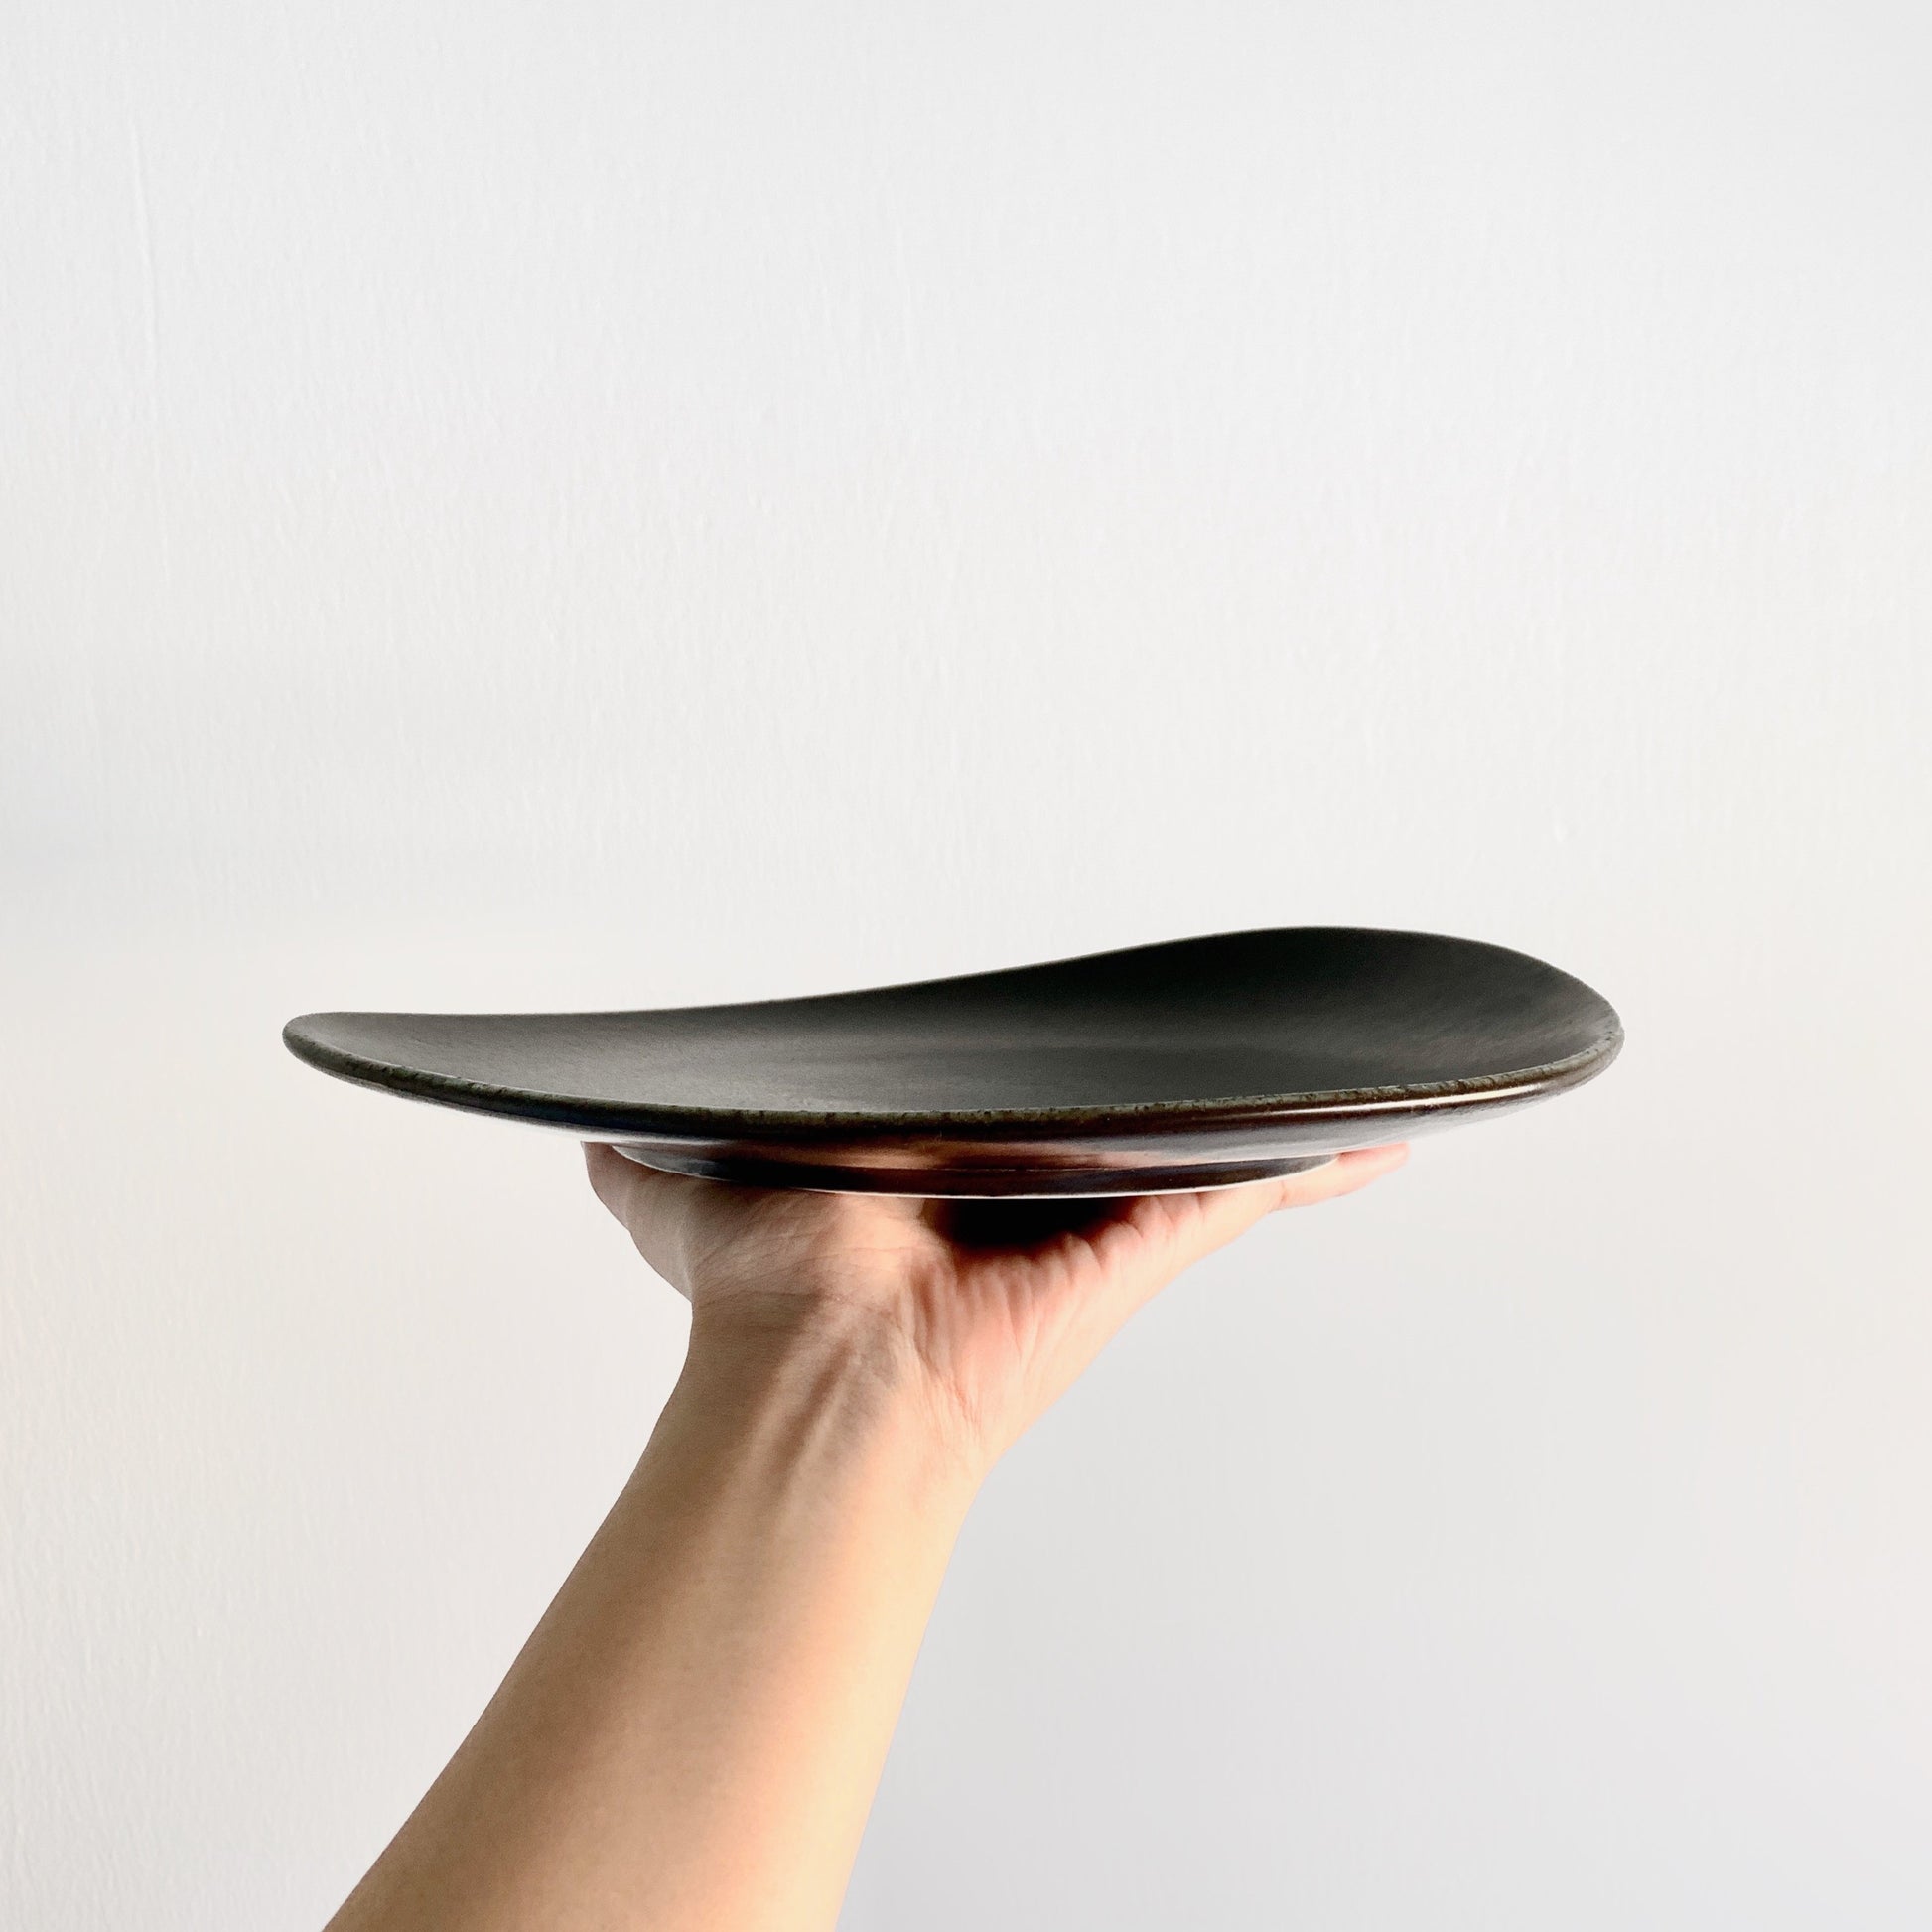 unique asymmetrical dinnerware piece - serving plate in black